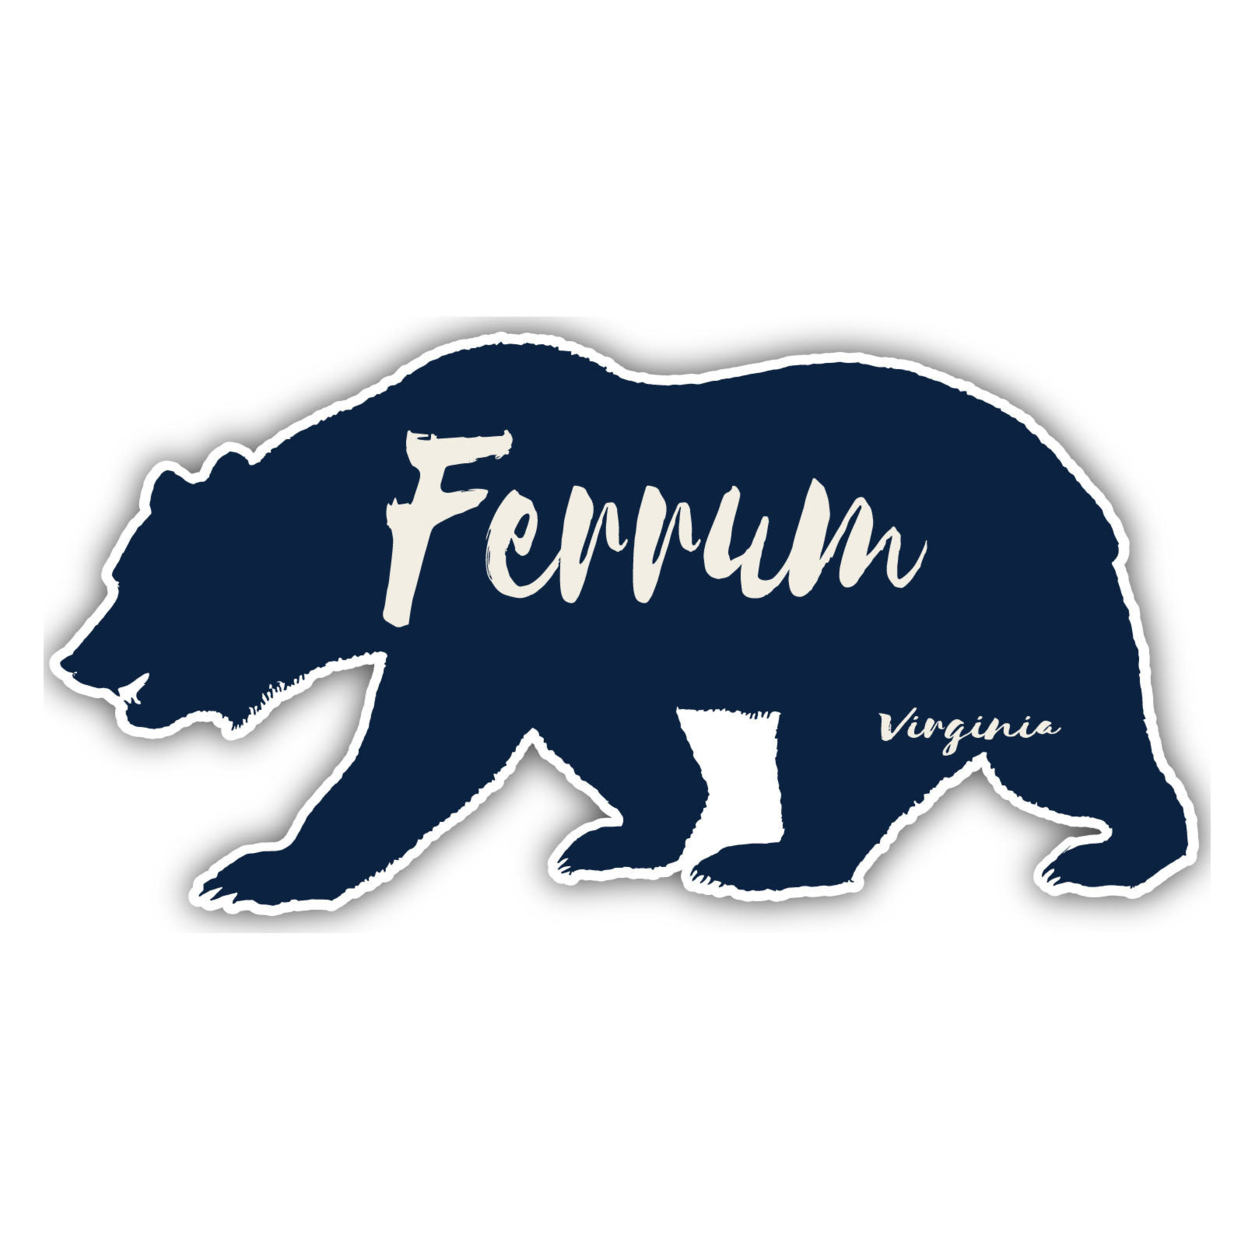 Ferrum Virginia Souvenir Decorative Stickers (Choose Theme And Size) - Single Unit, 6-Inch, Bear